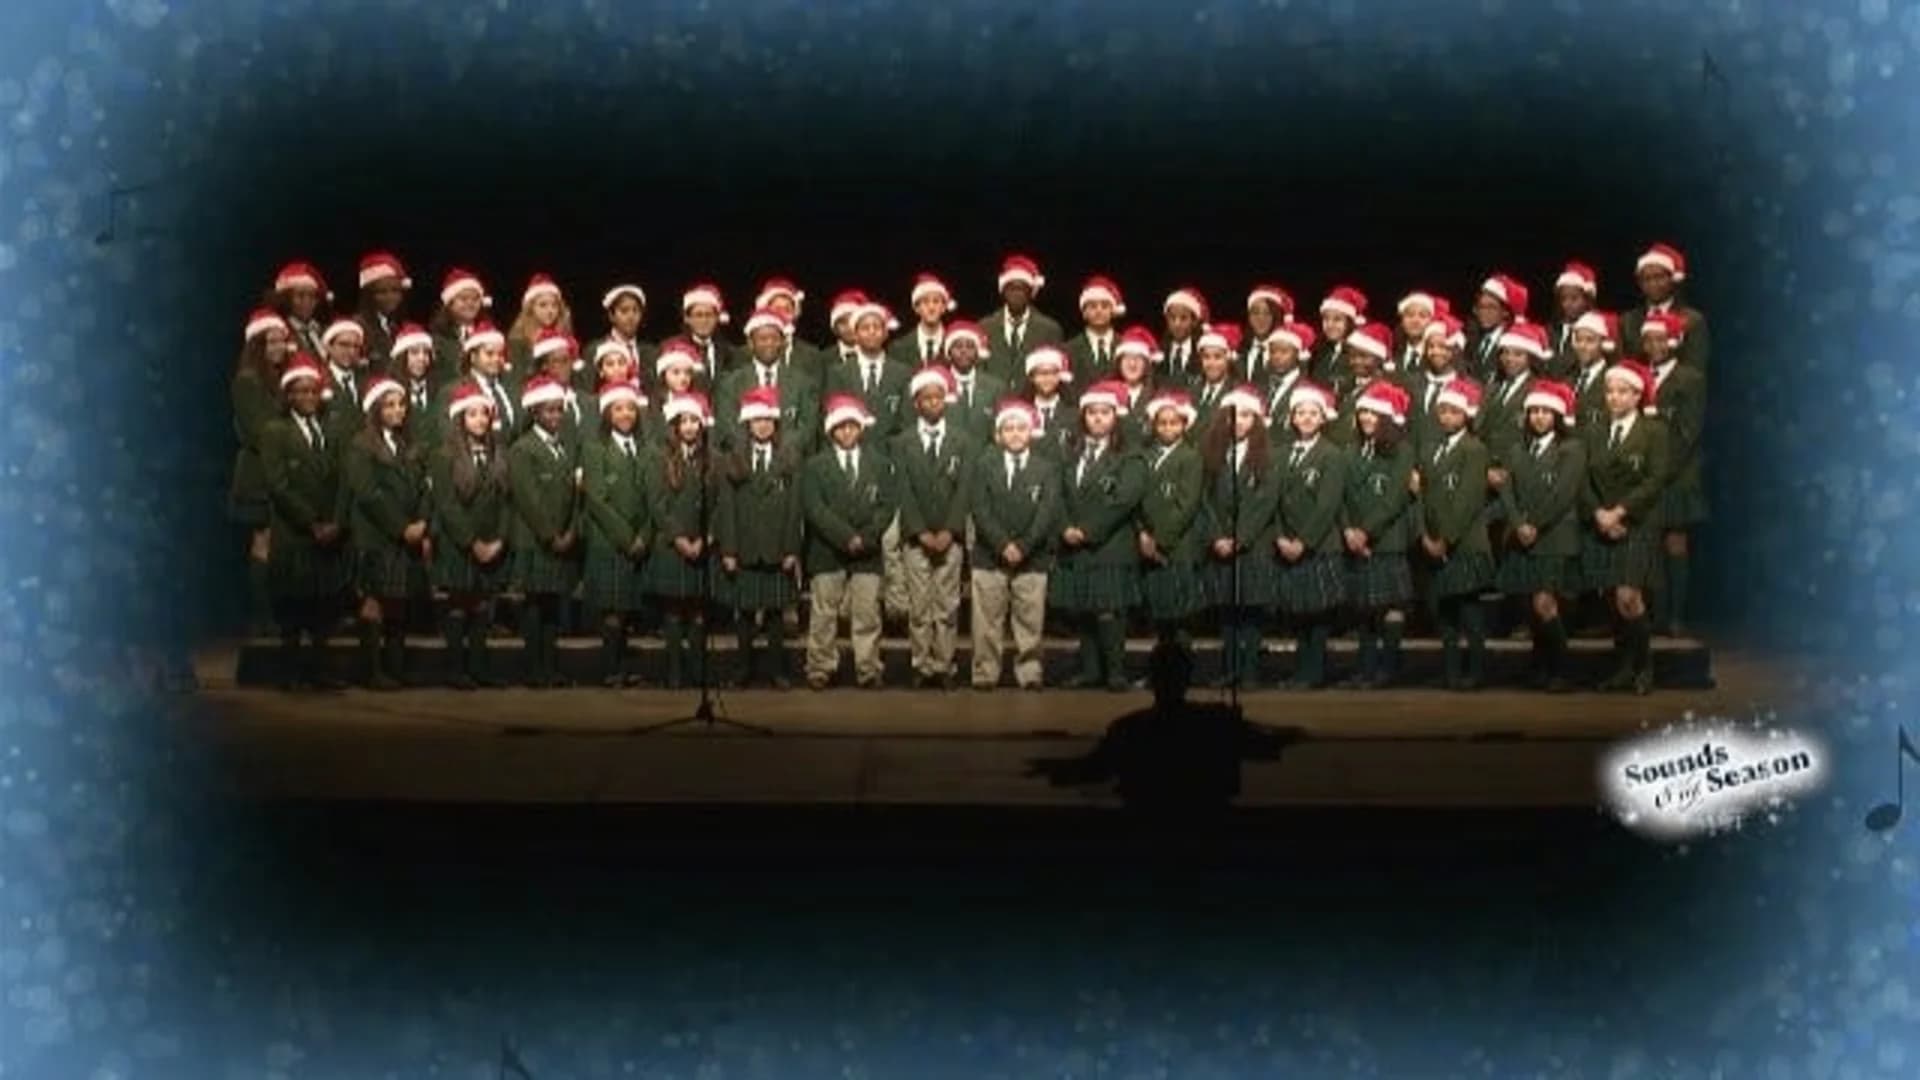 Robert Treat Academy Chorus performs holiday songs